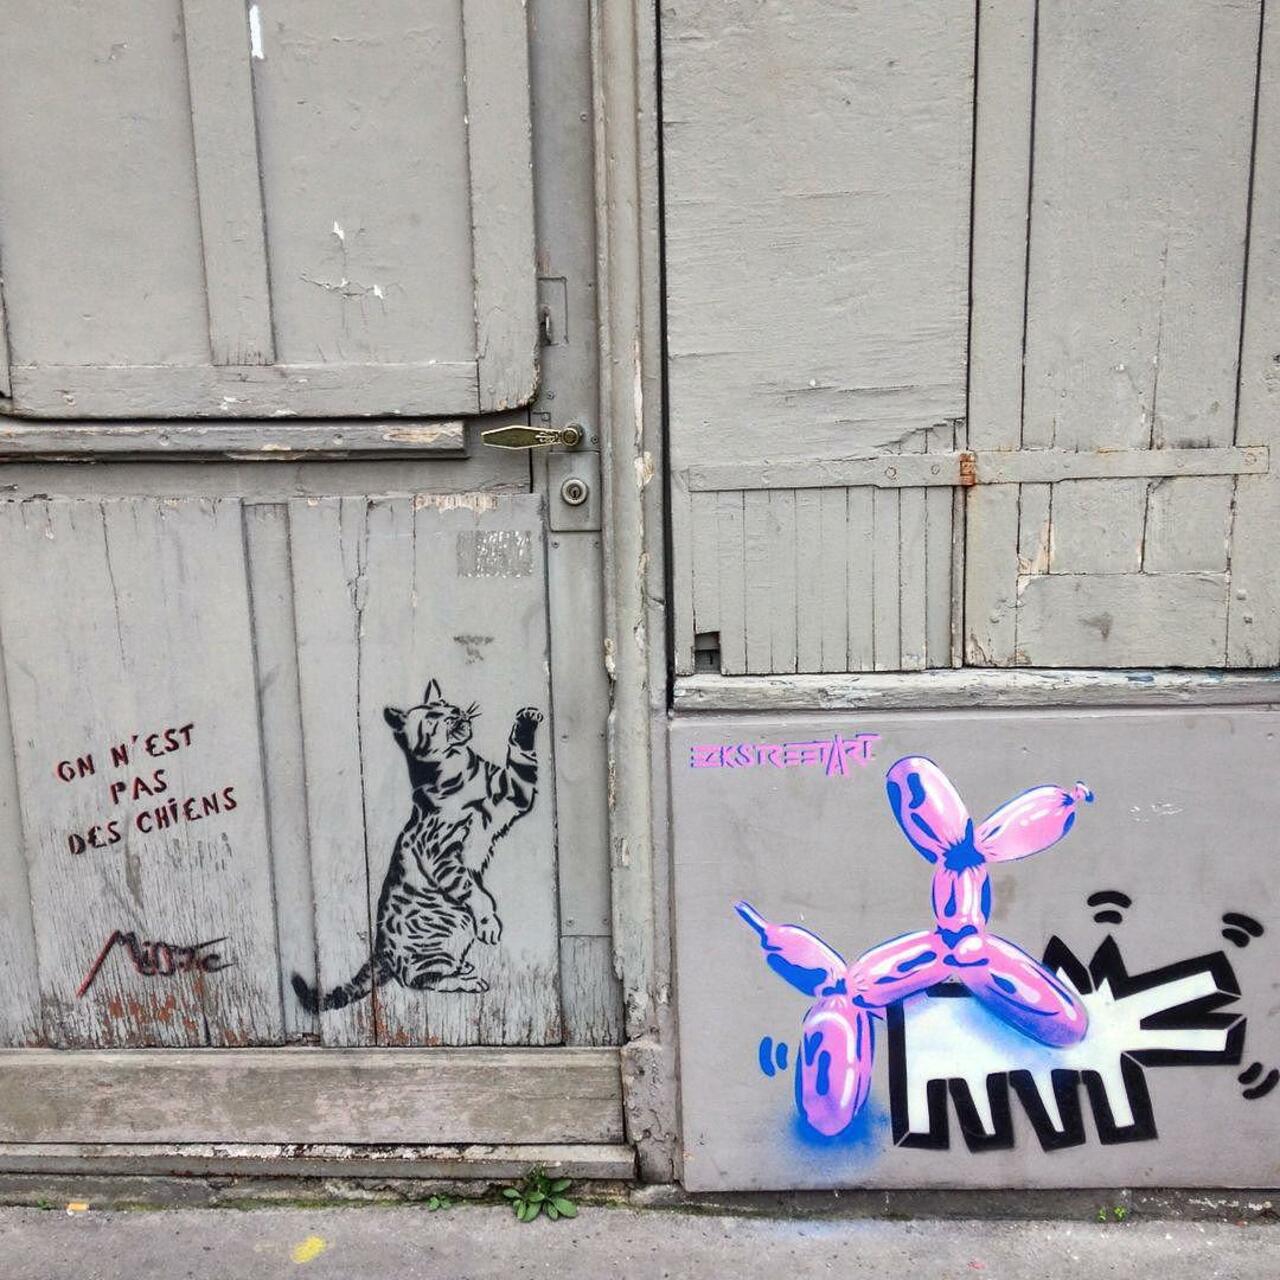 #Paris #graffiti photo by @joecoolpix http://ift.tt/1K1VMuS #StreetArt http://t.co/WuDTxtKXCI